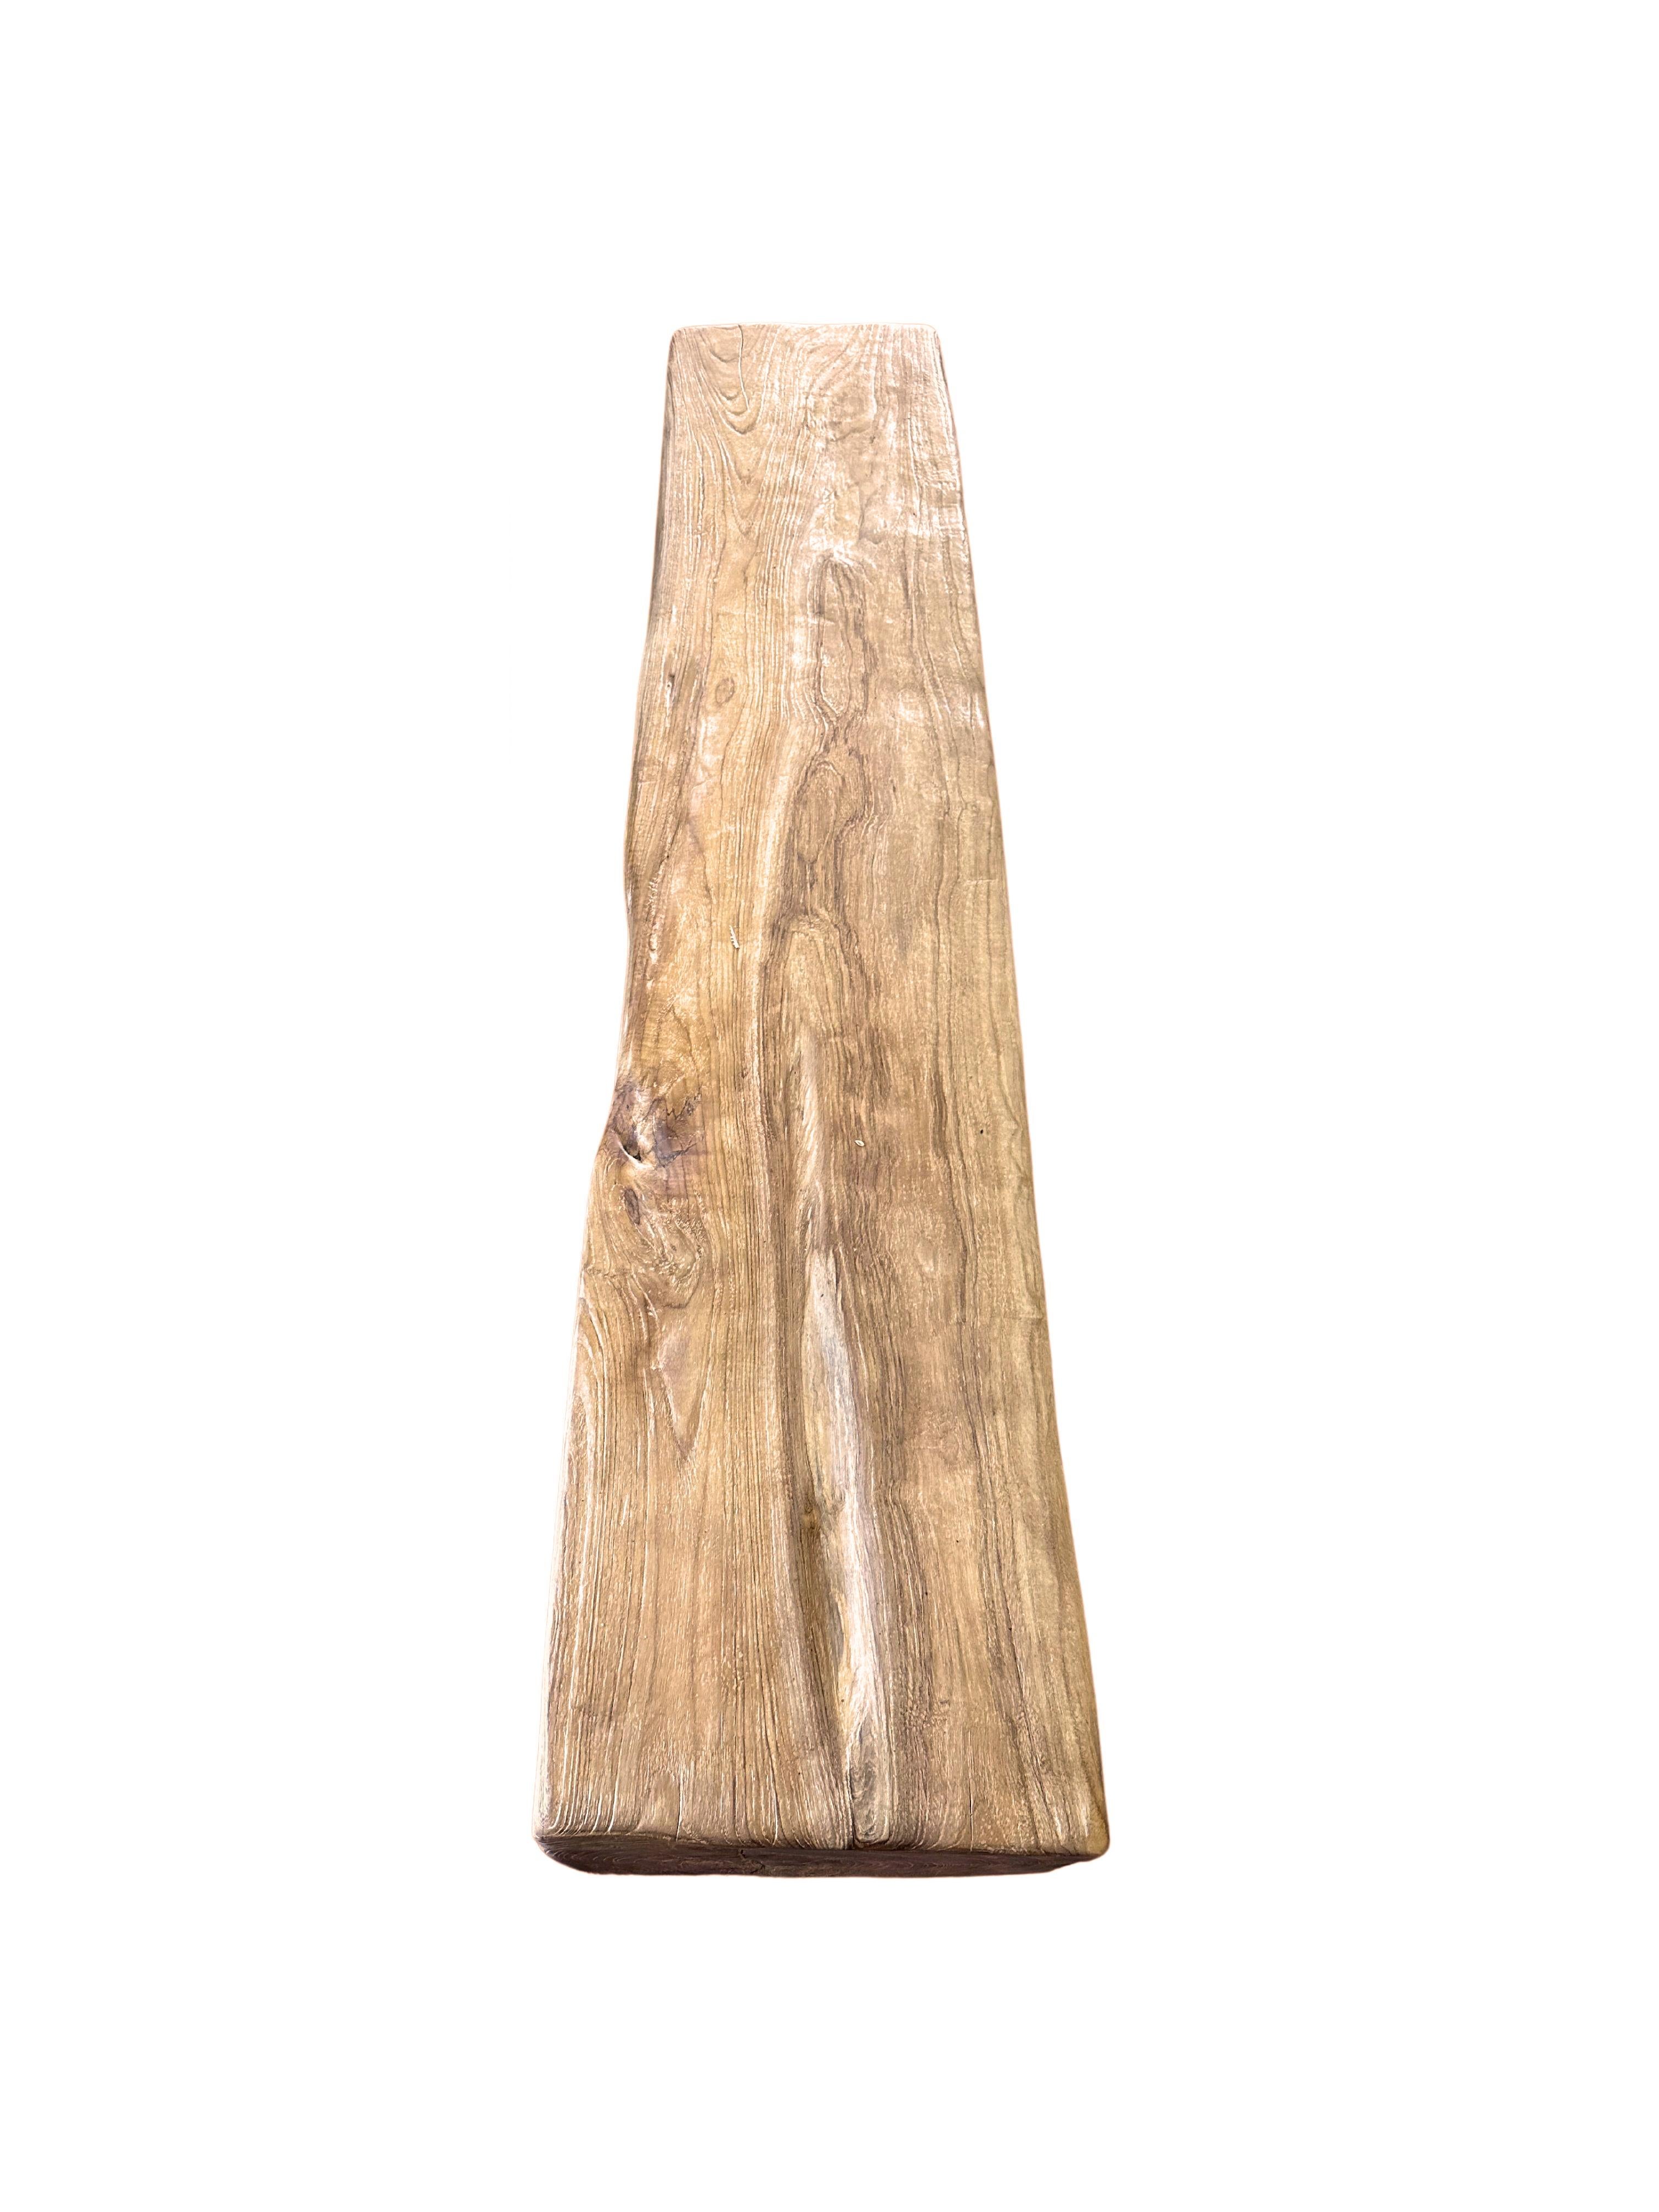 Hand-Carved Solid Teak Wood Sculptural Bench Modern Organic For Sale